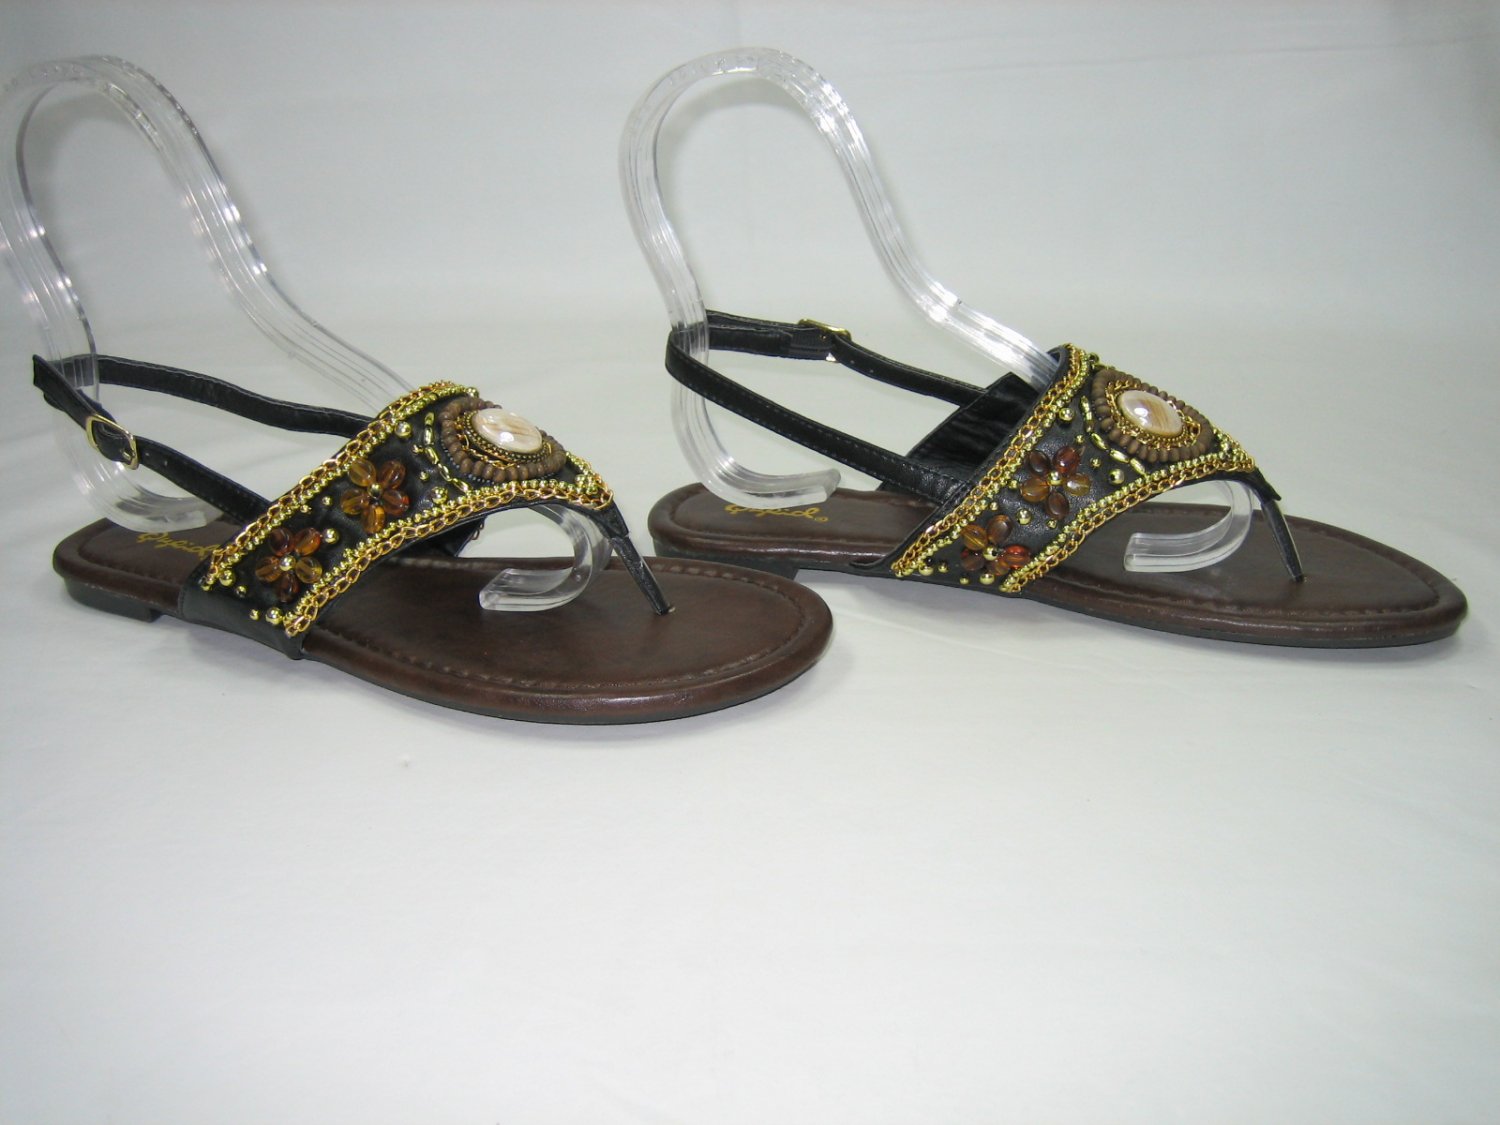 Bejeweled decorated sandals flats thongs slingbacks black size 6.5